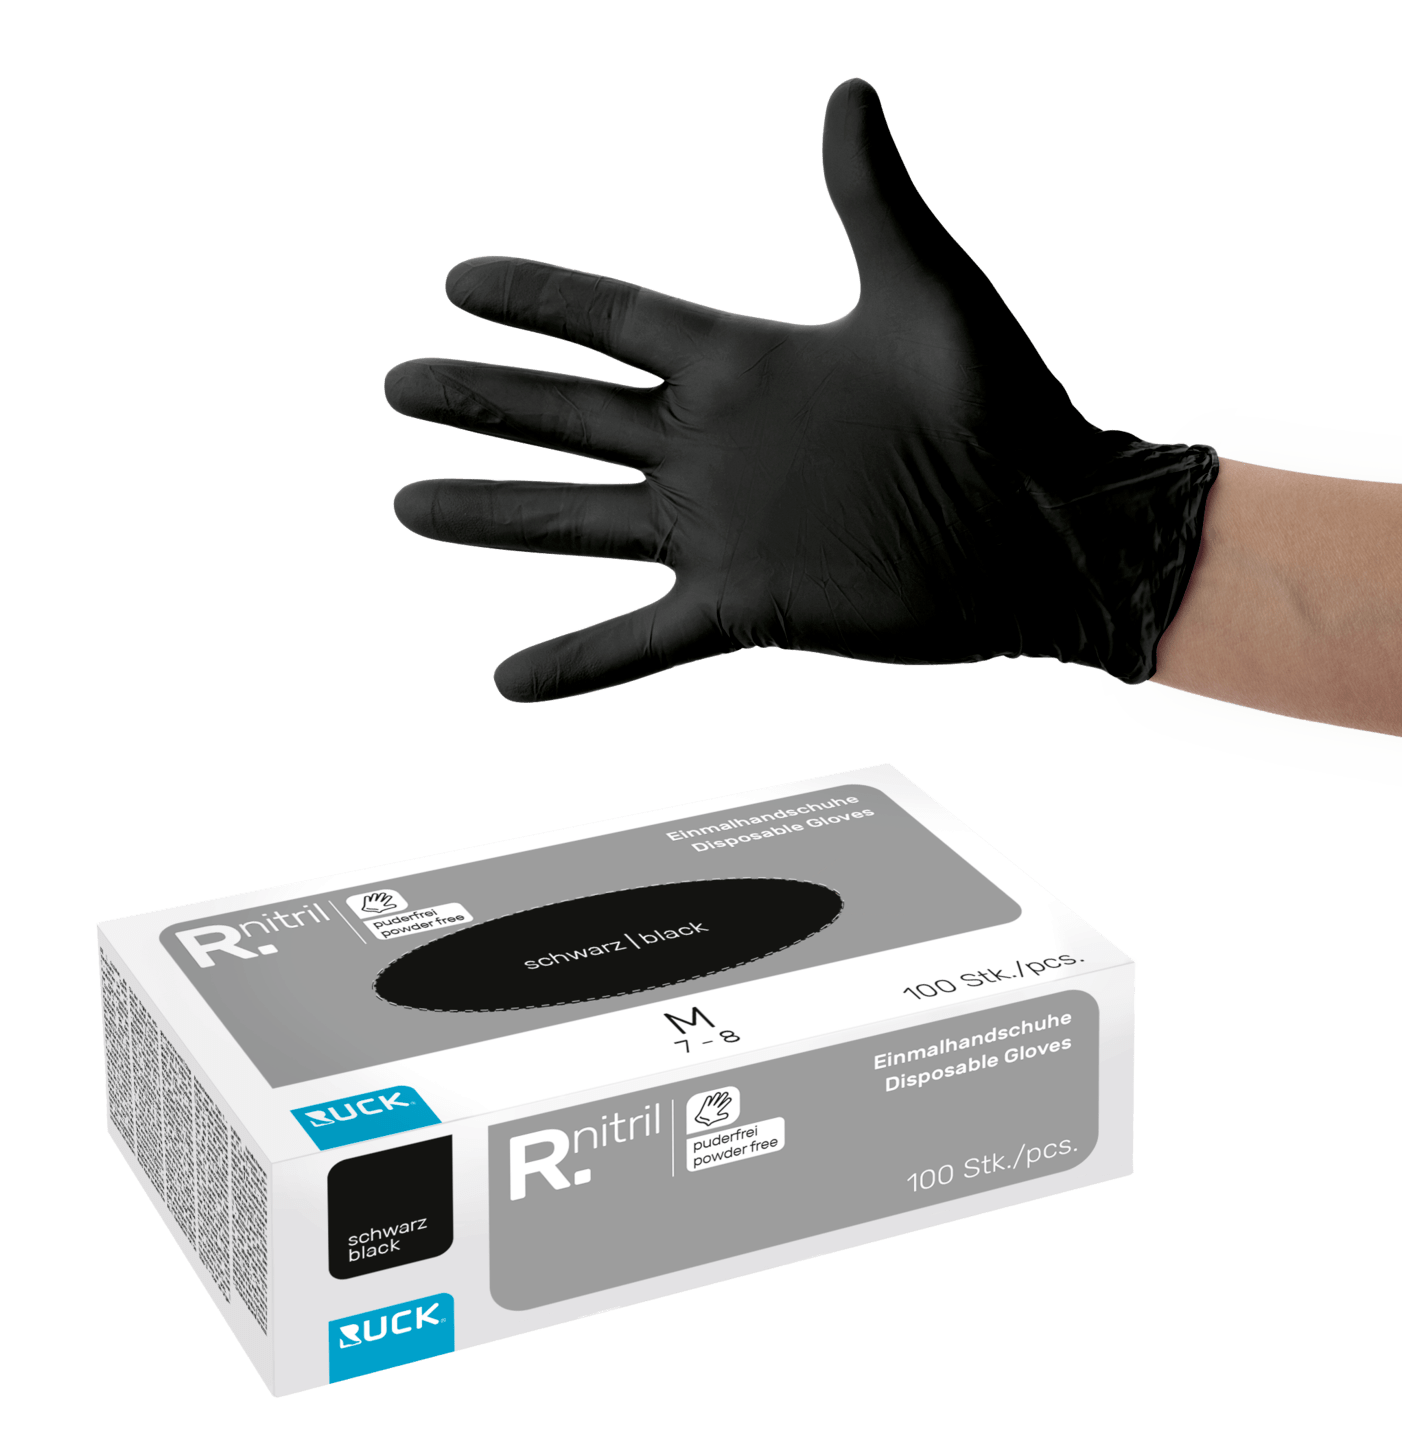 RUCK - Nitrile disposable gloves in black